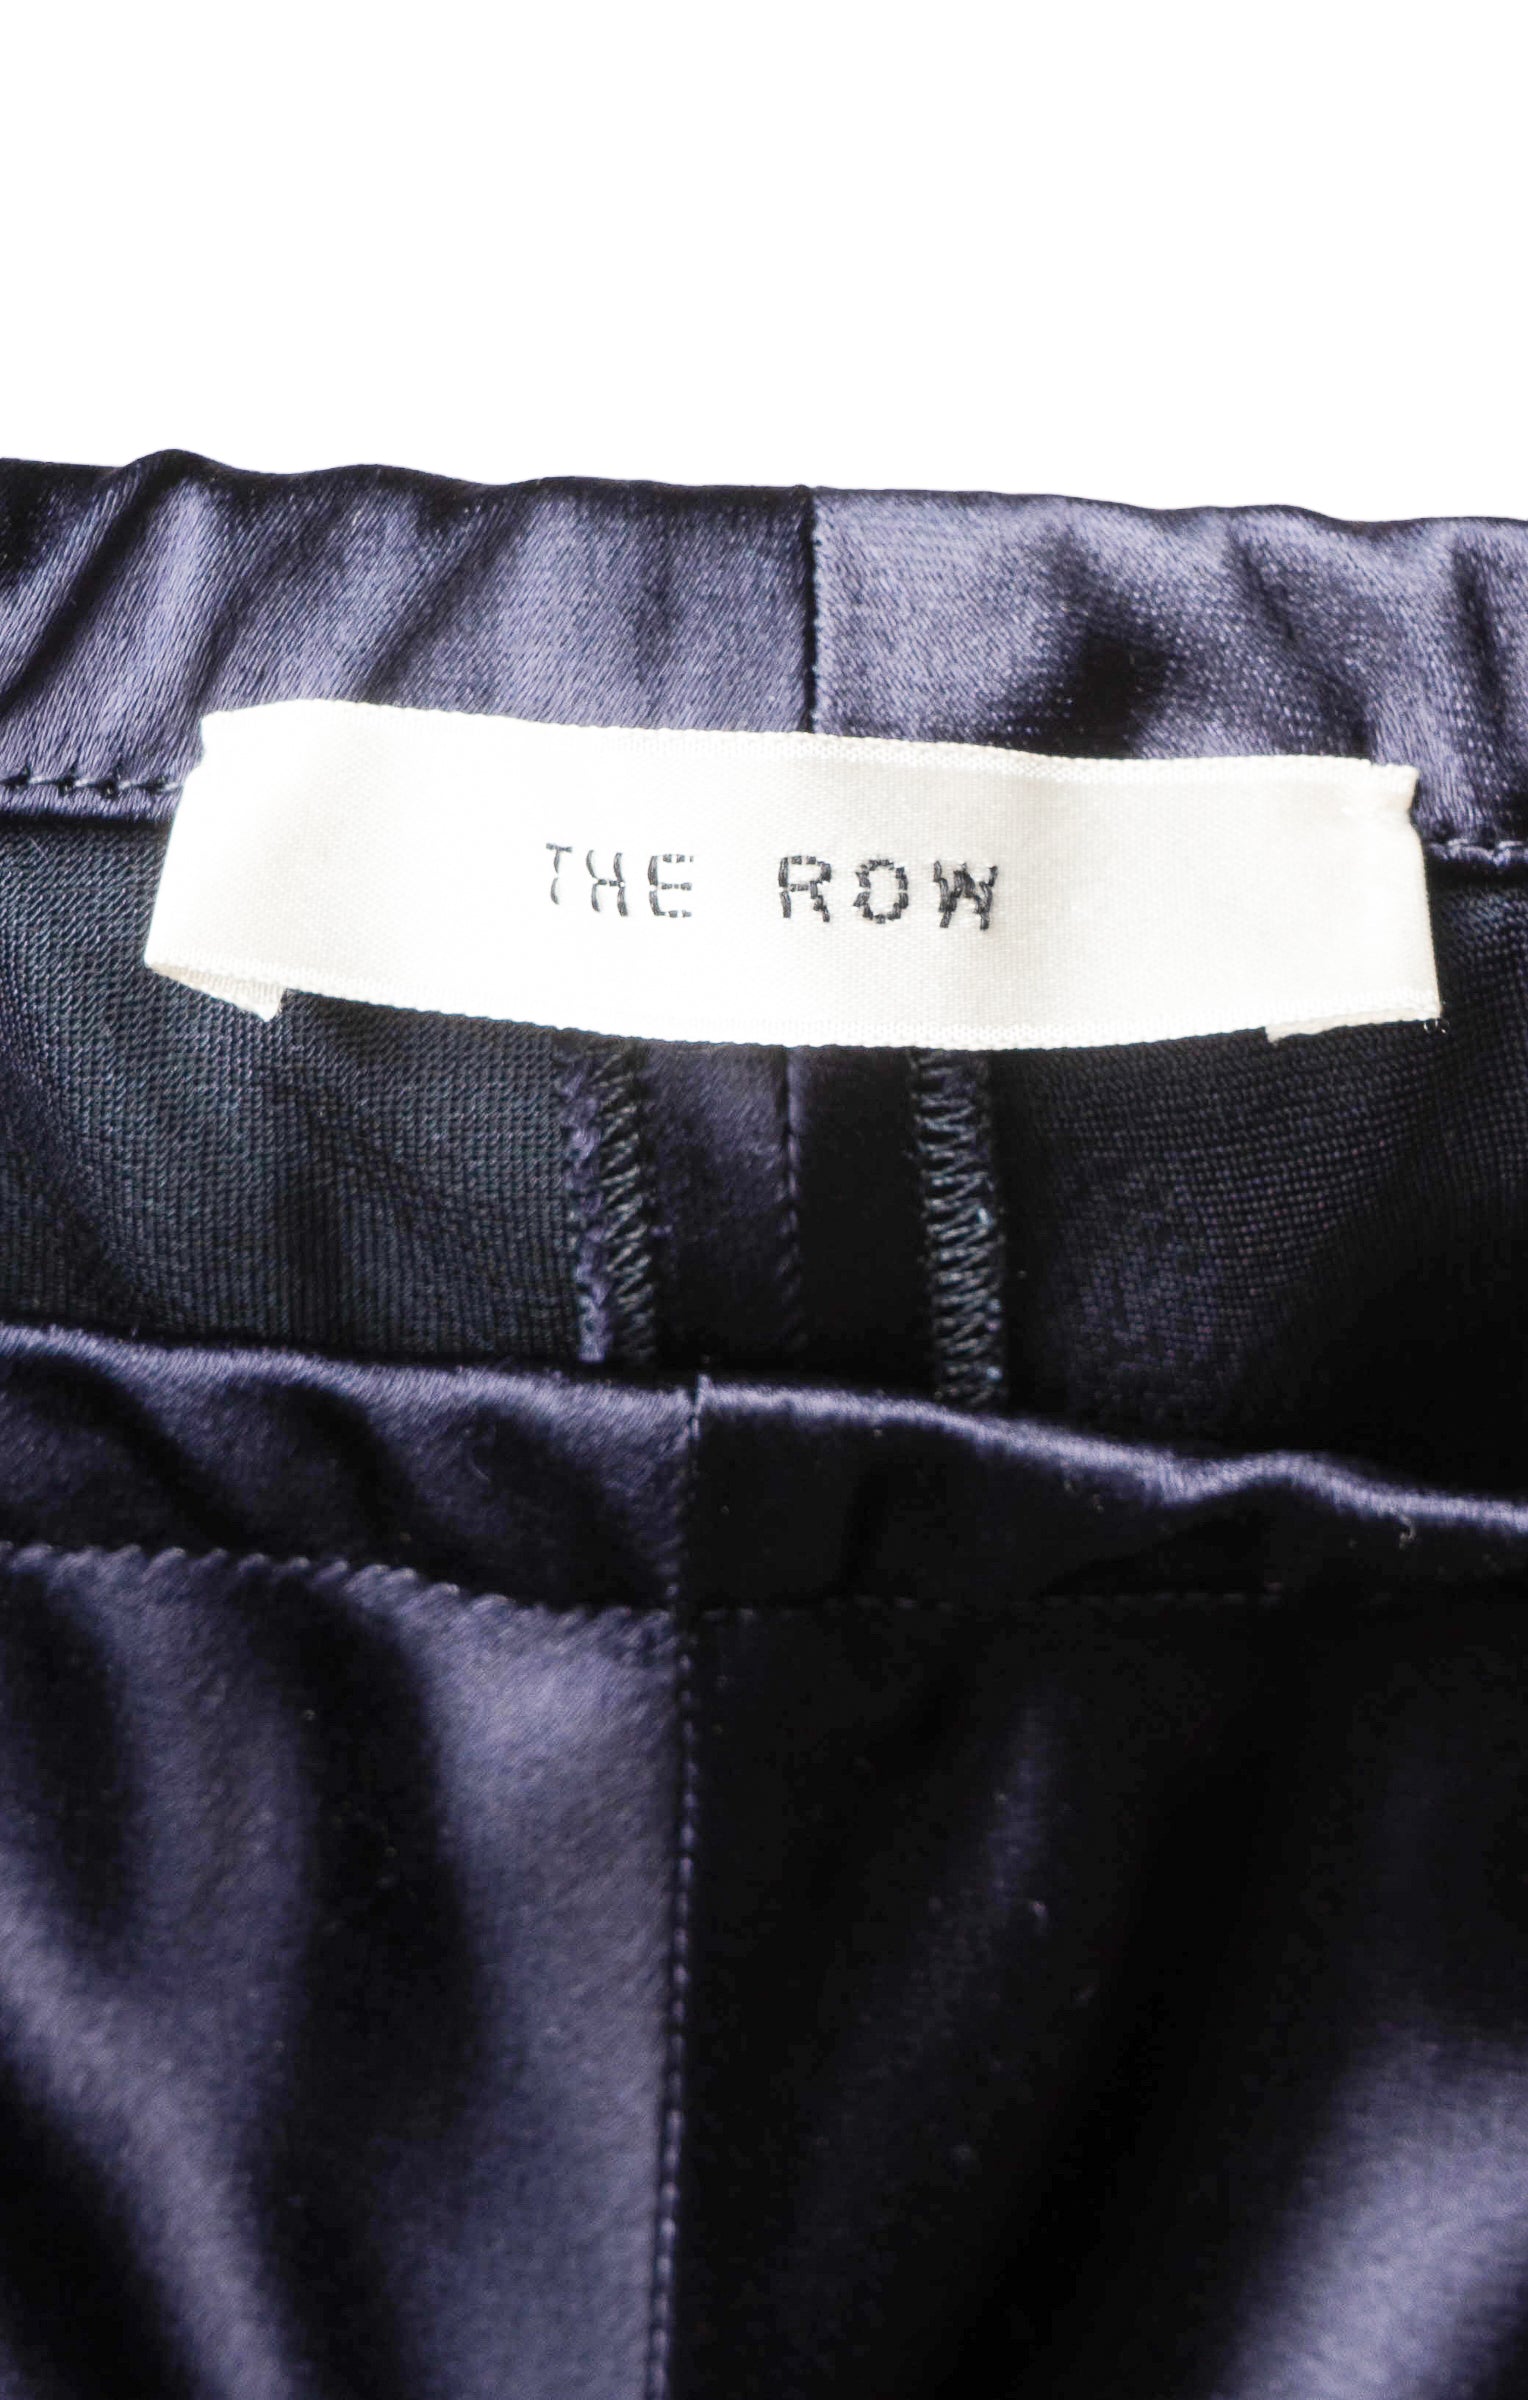 THE ROW Pajama Set Size: Robe - M/L, Top - M, Pants - L